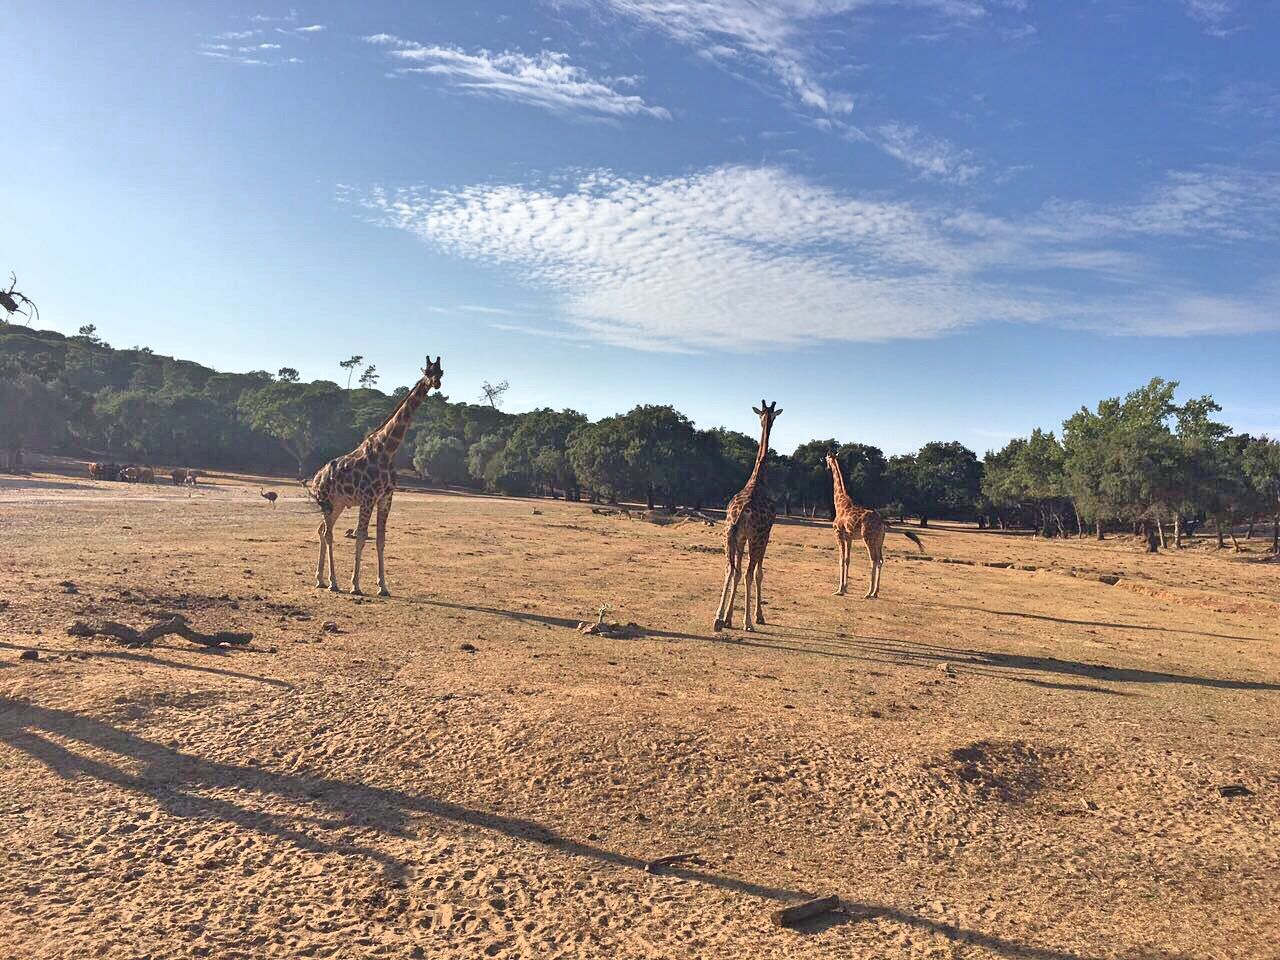 Giraffes at Badoca Safari Park